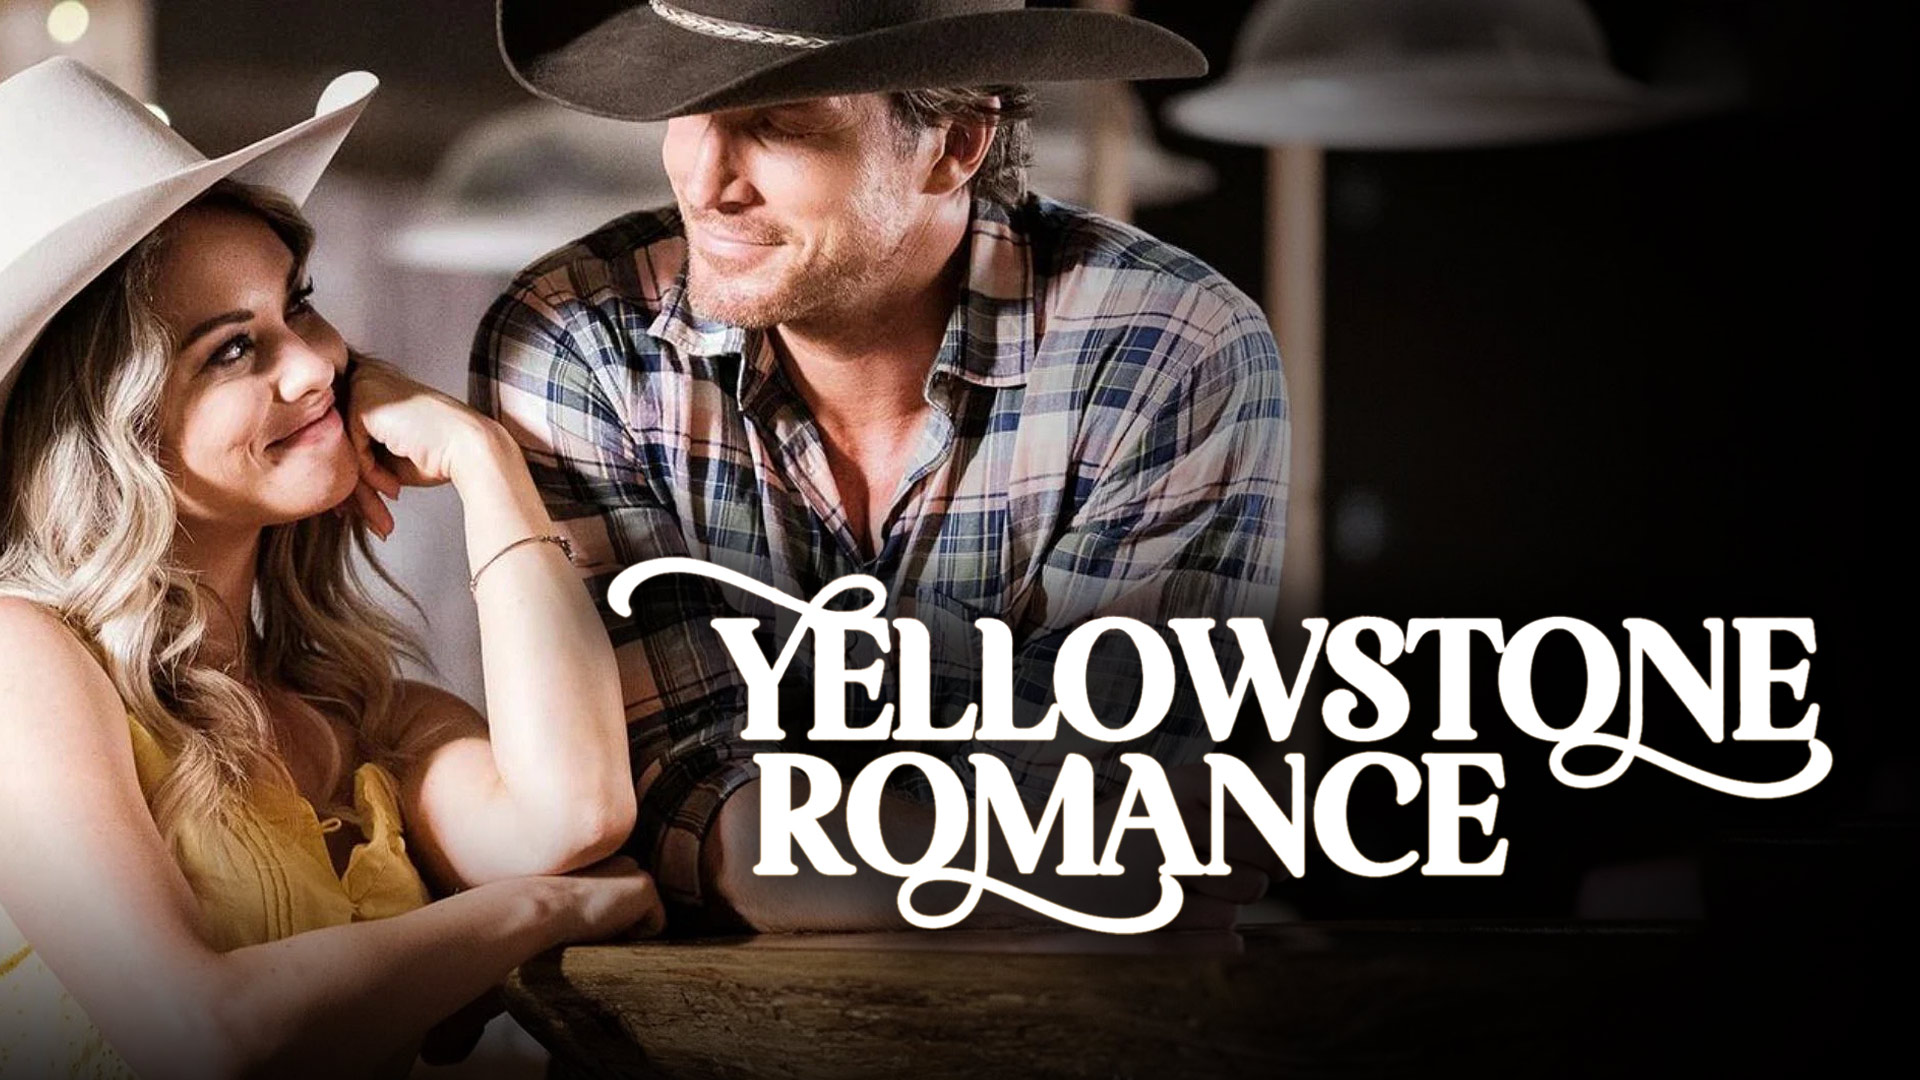 Yellowstone Romance Full HD Movie Download